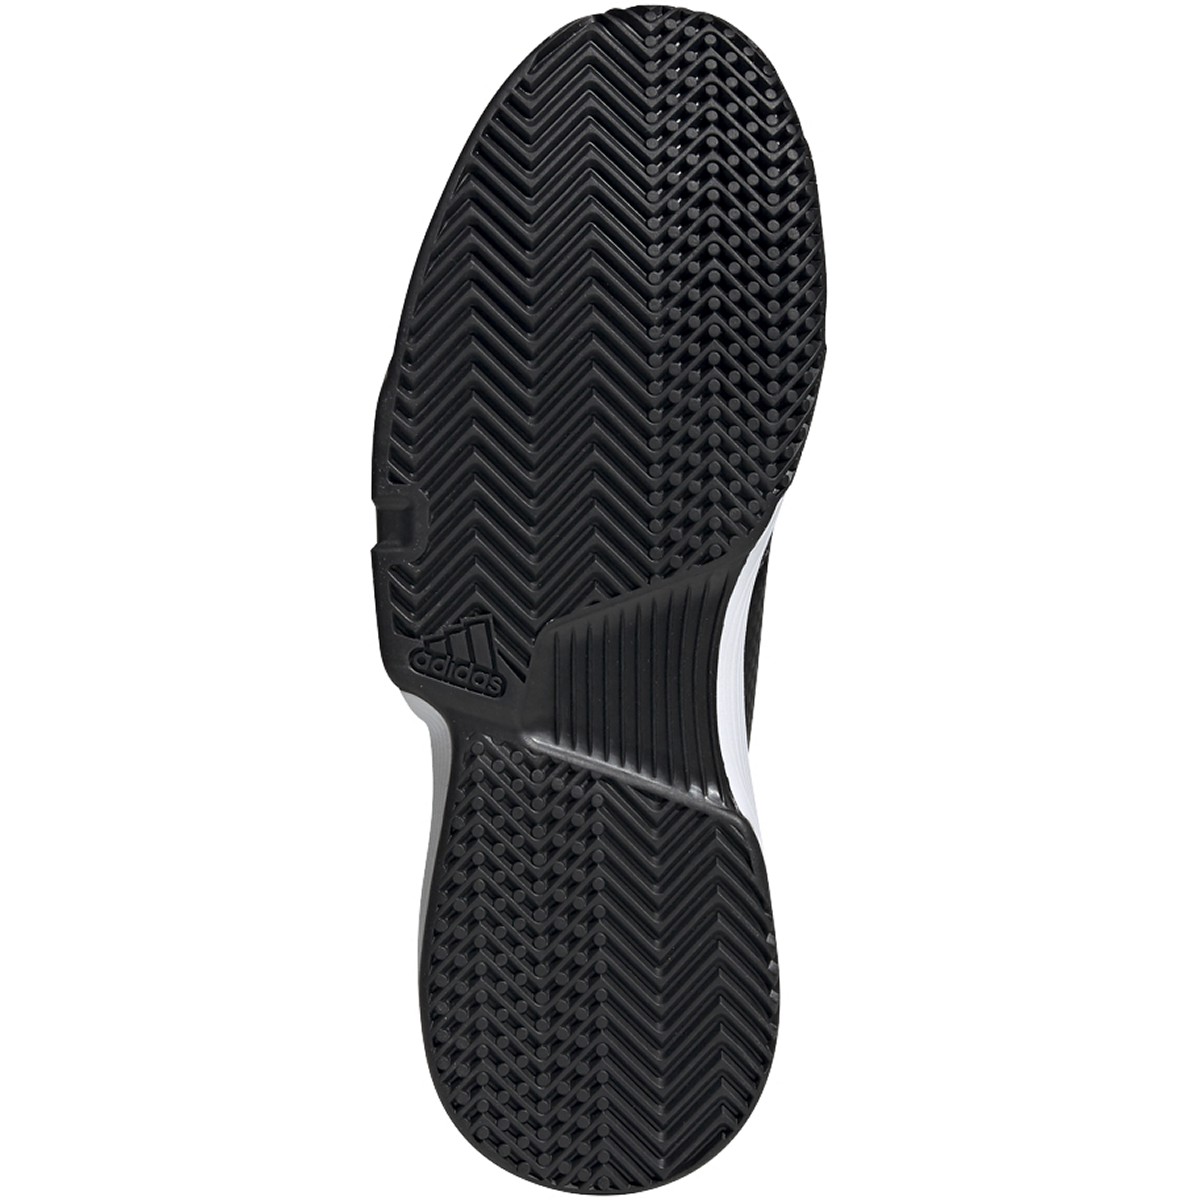 Adidas Men's GameCourt Tennis Shoes (Black/White)